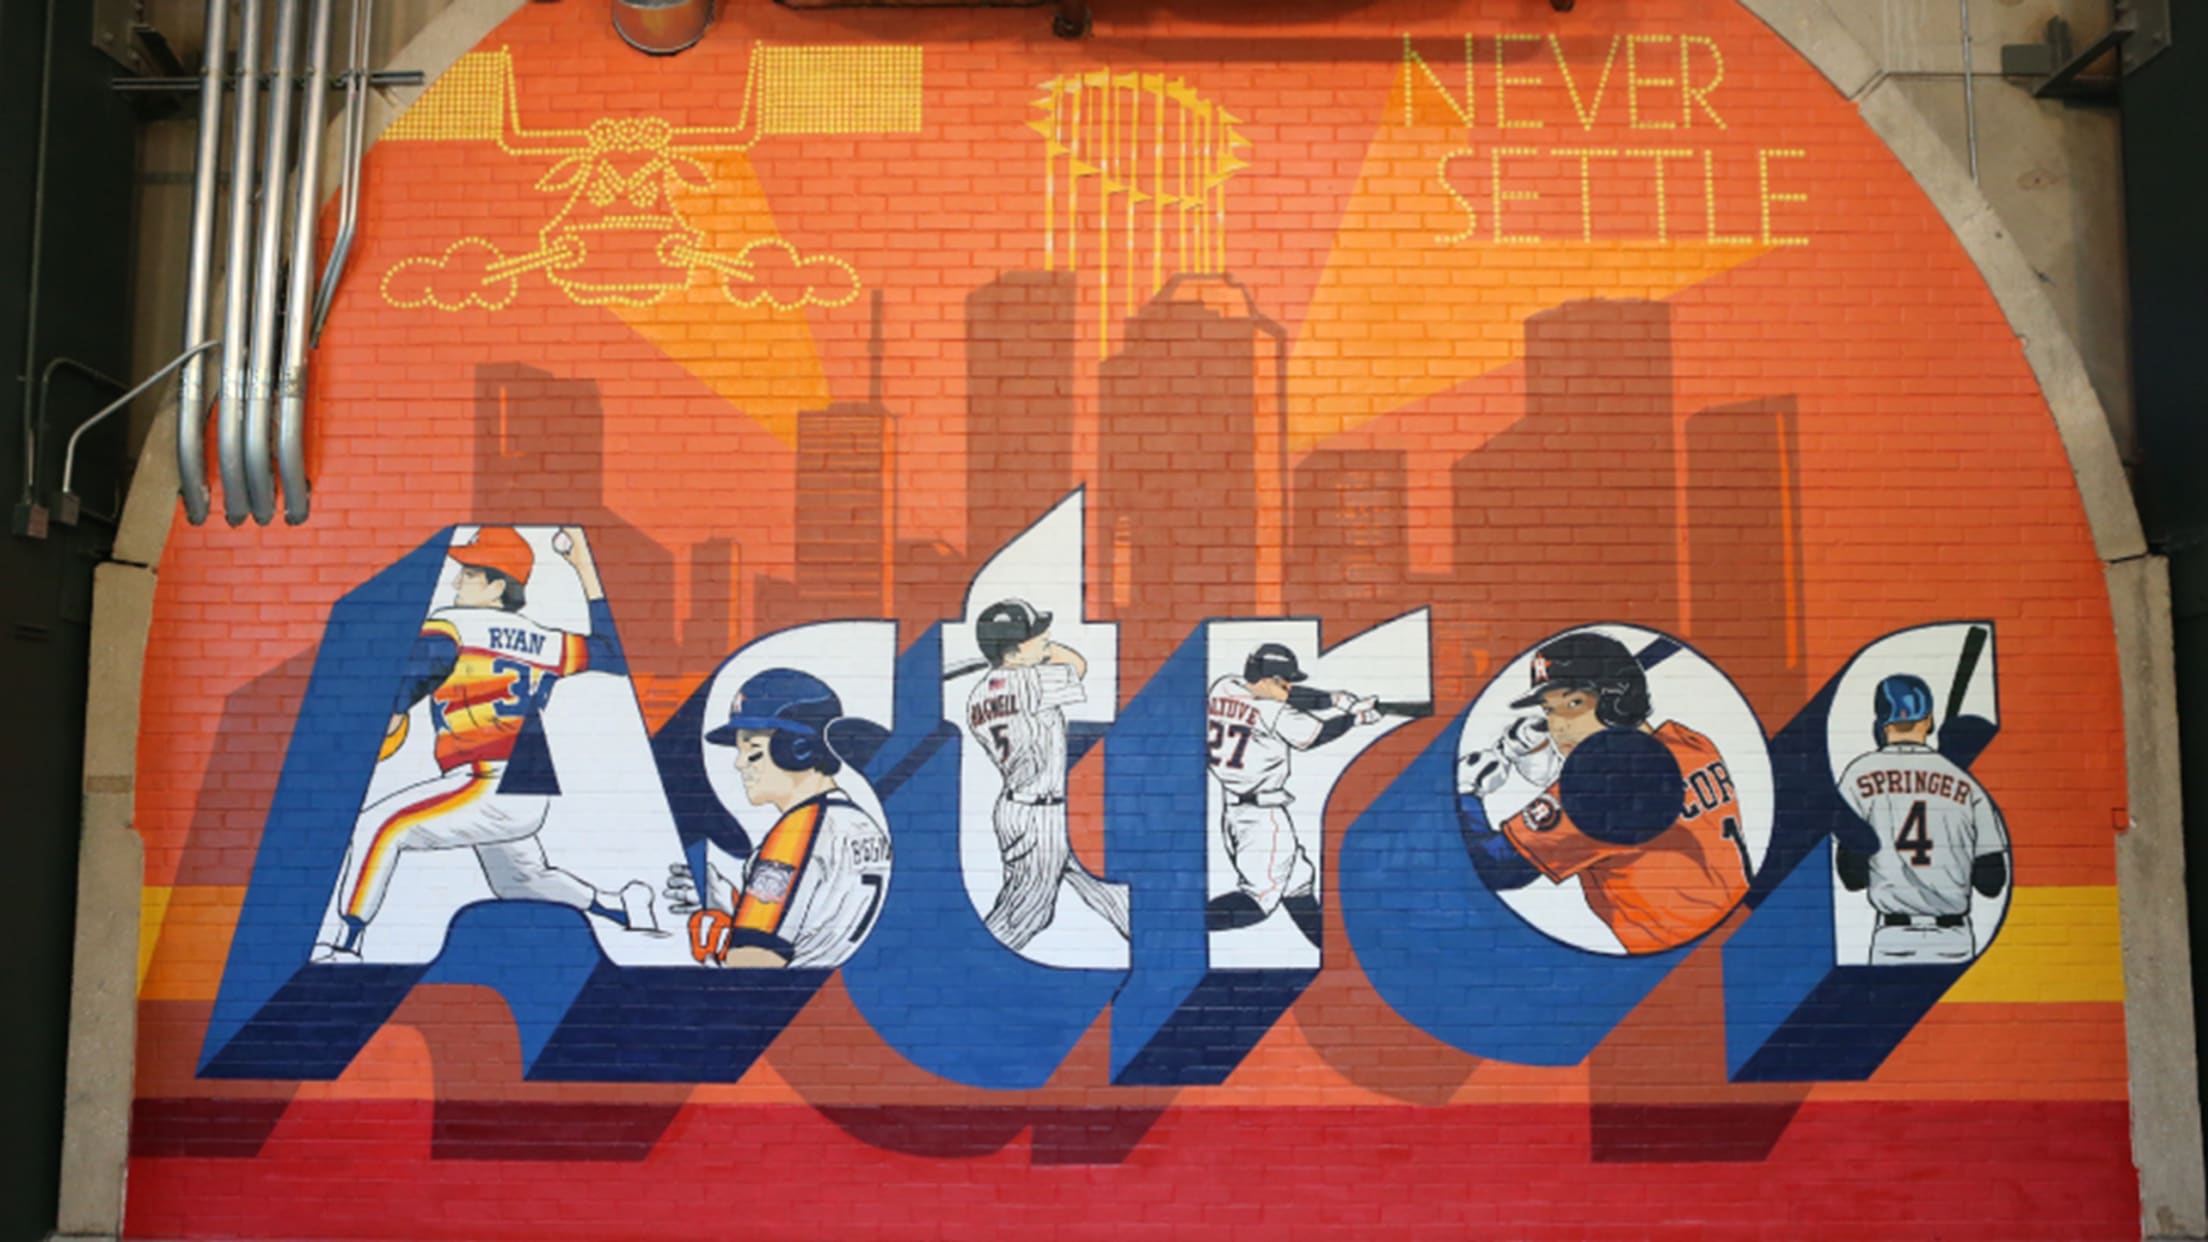 Houston Astros - Painted Art Bat (MLB)